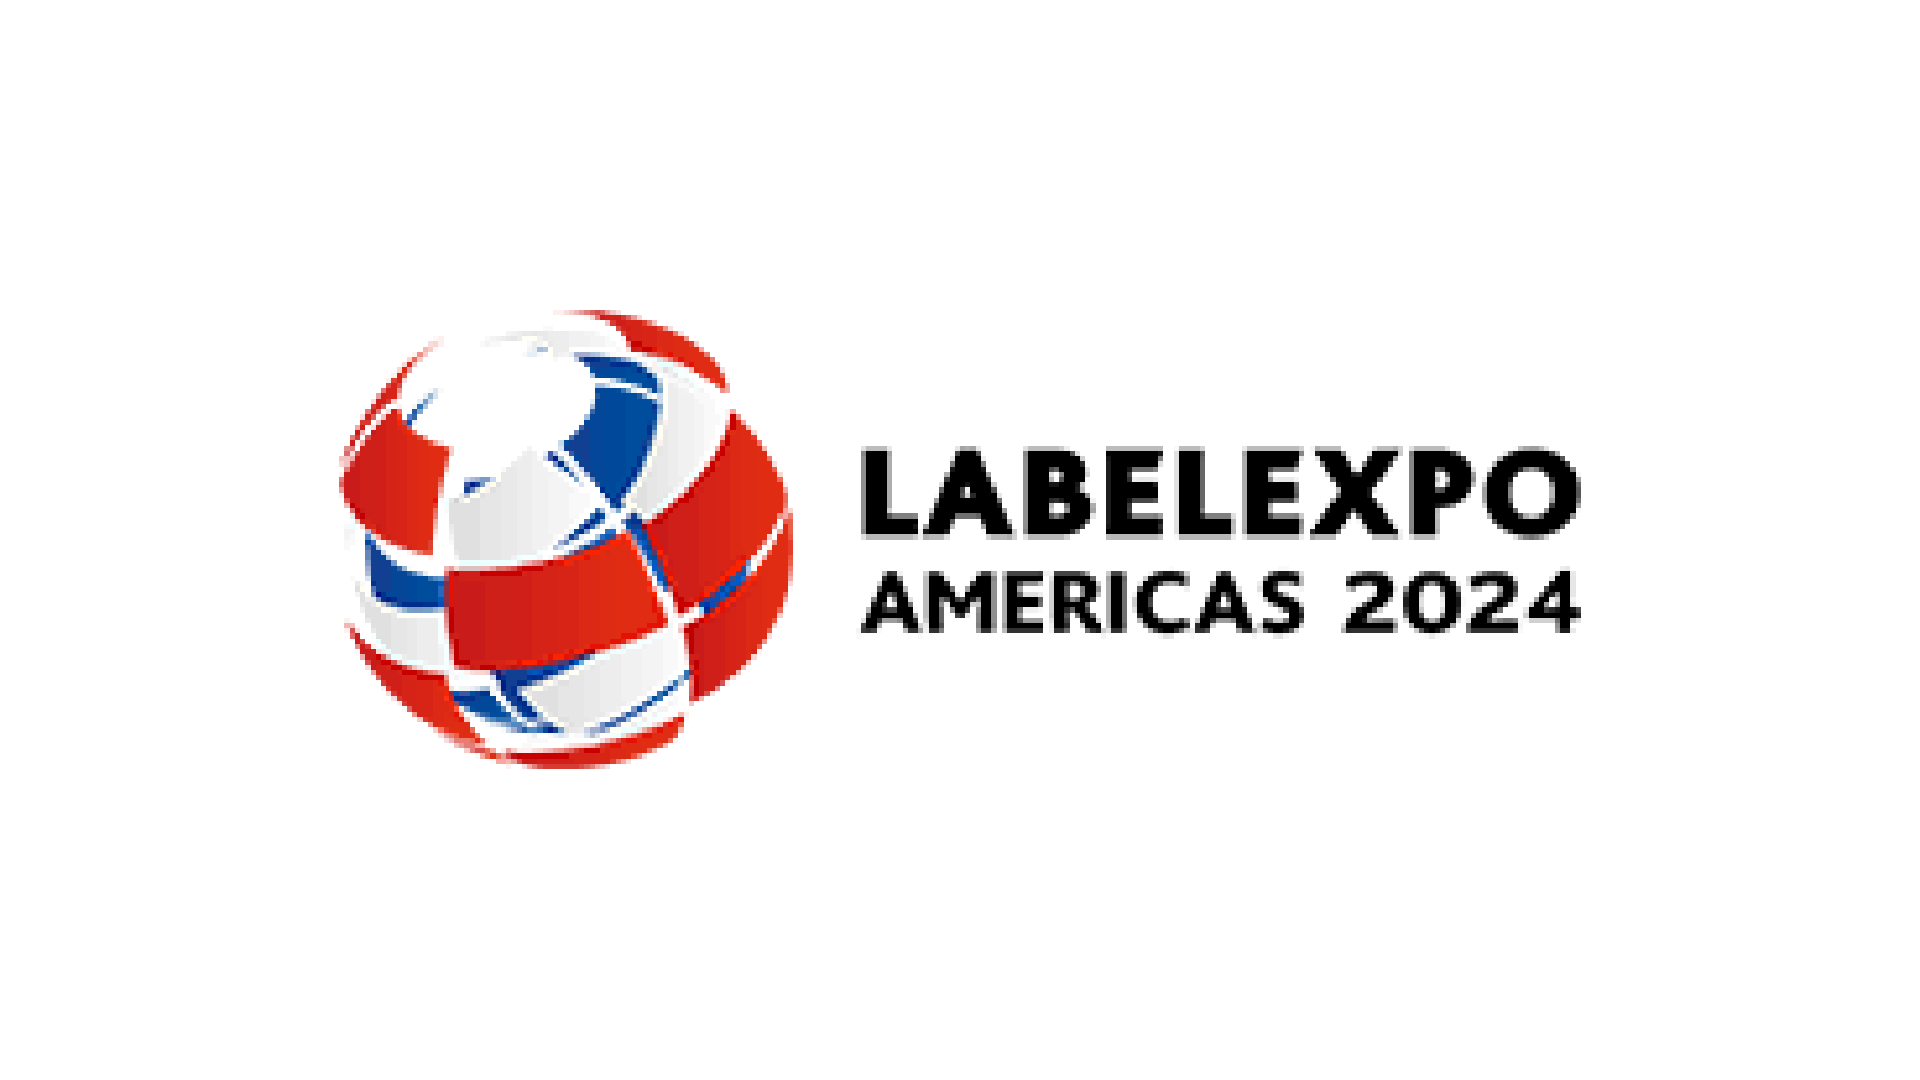 LabelExpo Americas 2024 Specialist Printing Worldwide